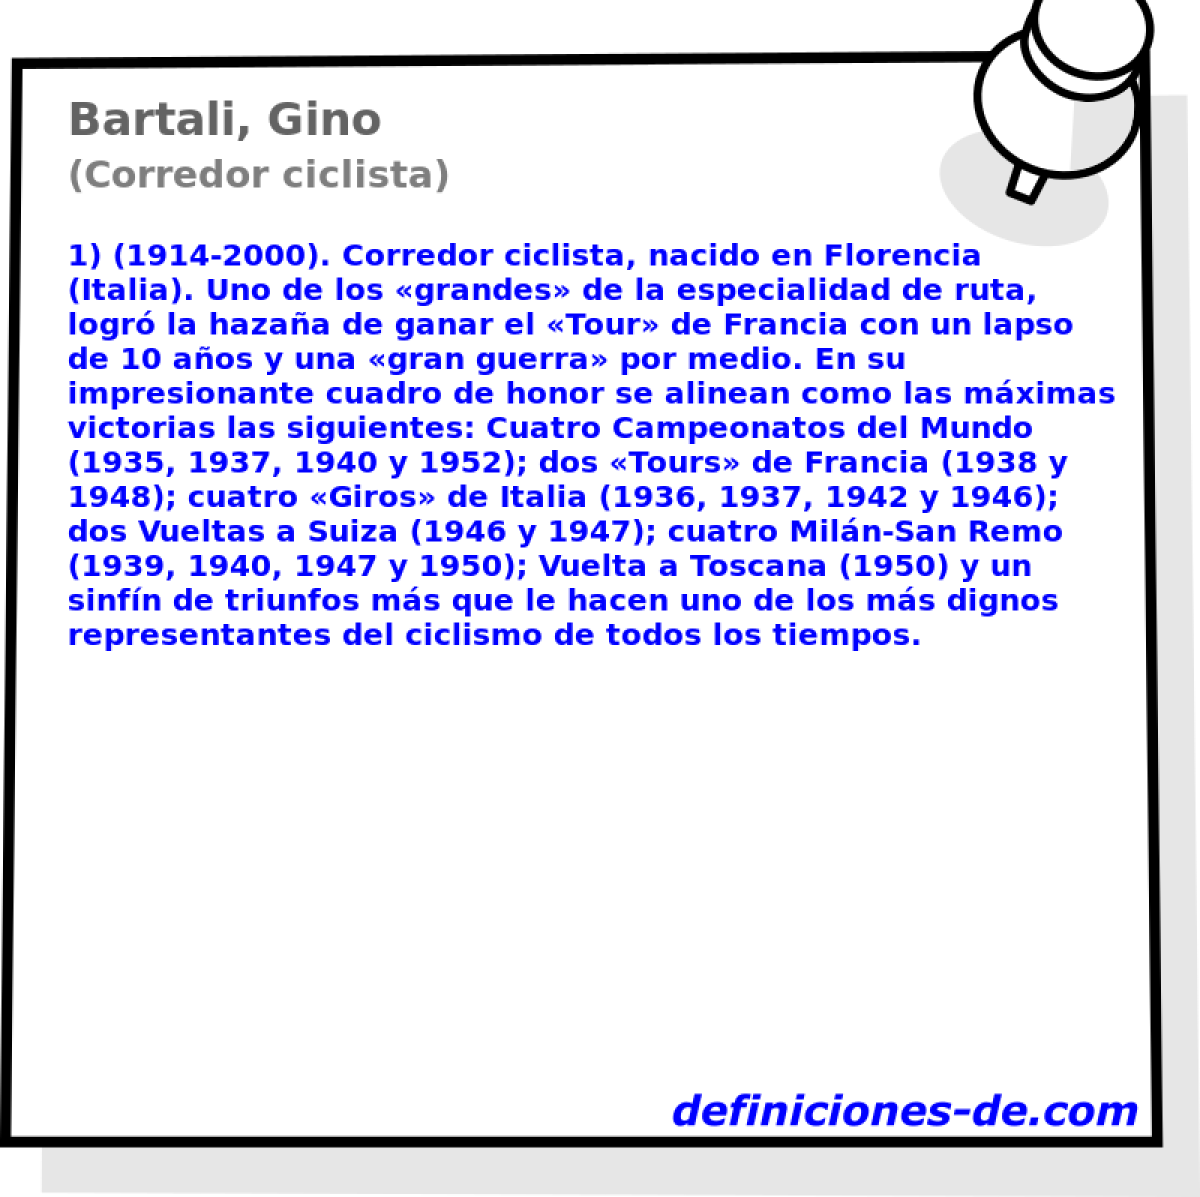 Bartali, Gino (Corredor ciclista)